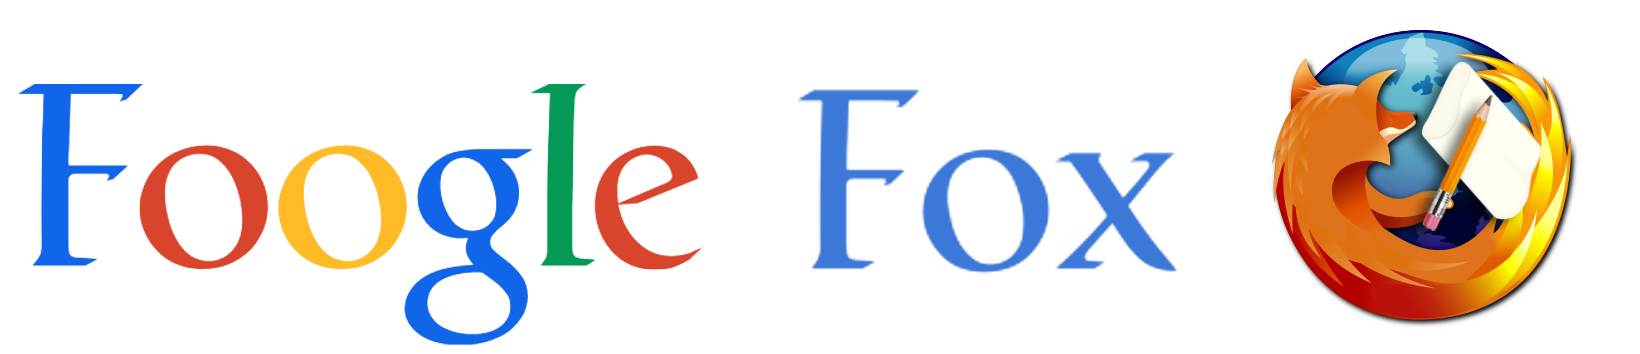 foogle logo